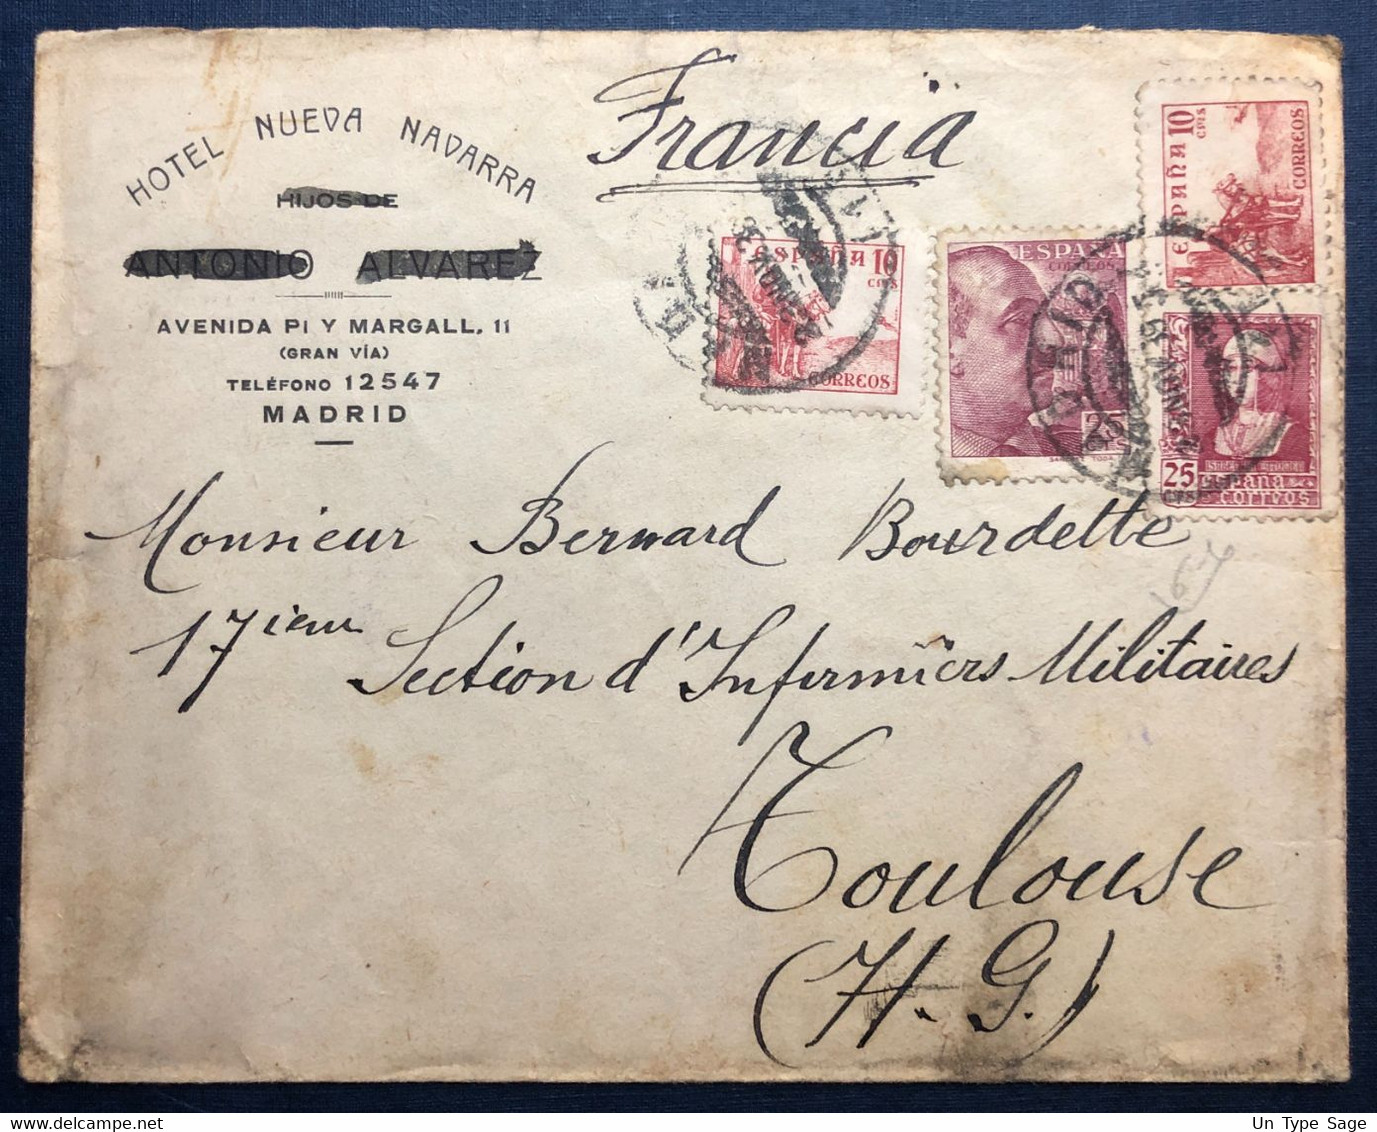 Espagne, Divers Sur Enveloppe De Madrid 1939 + Censure Madrid - (B4327) - Briefe U. Dokumente